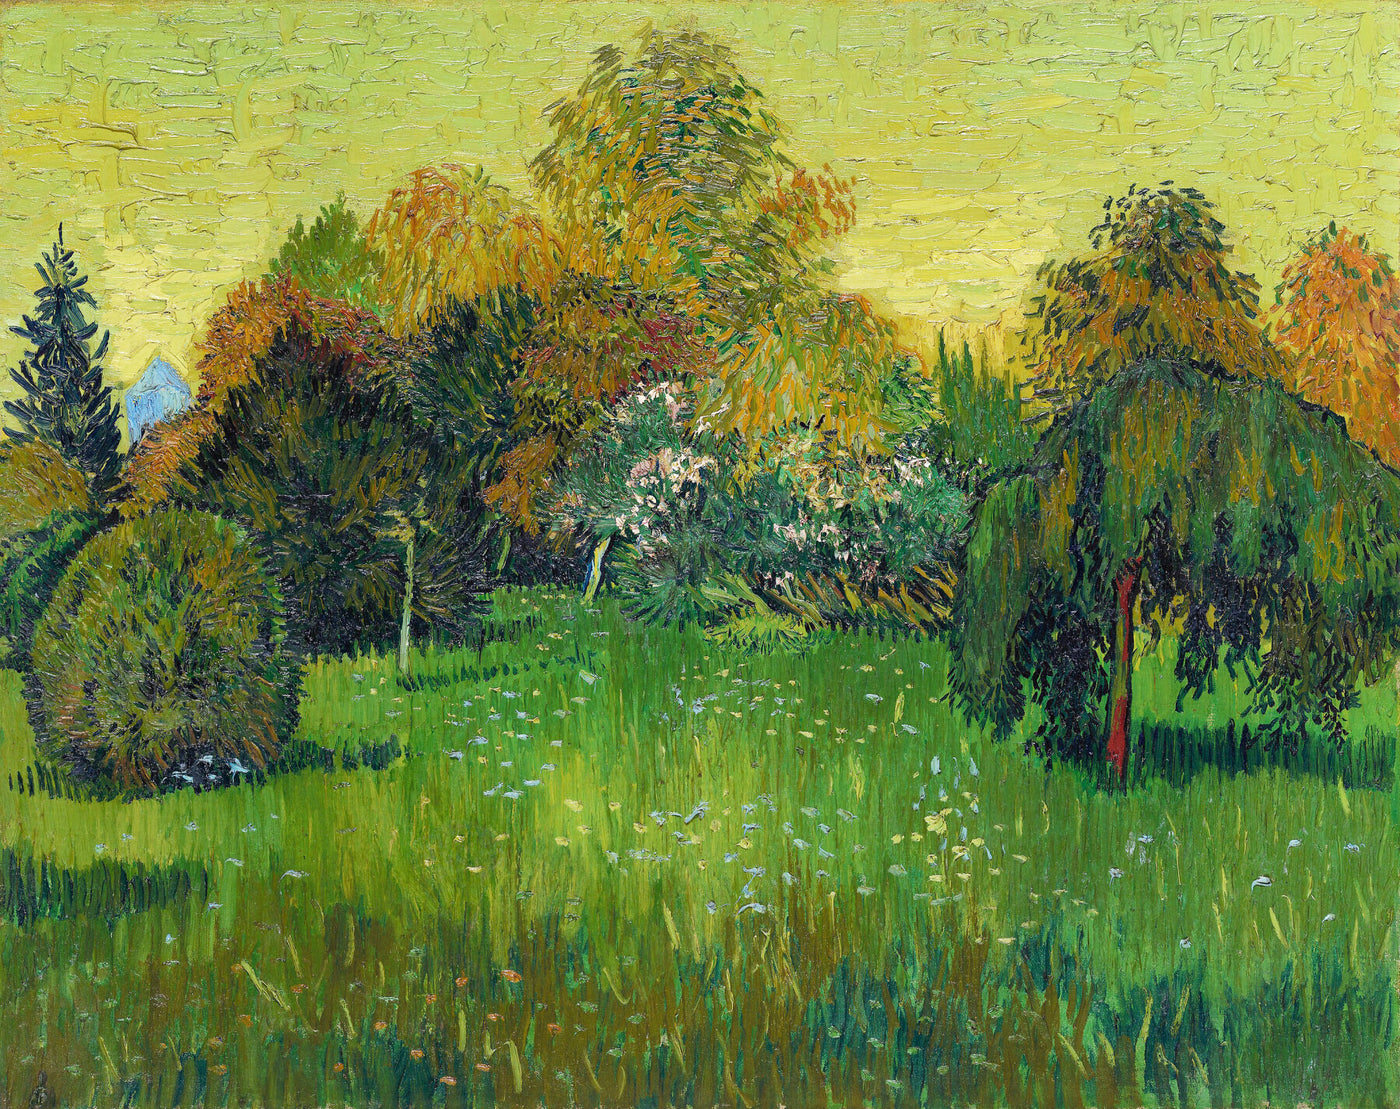 De tuin van de dichter - Vincent van Gogh